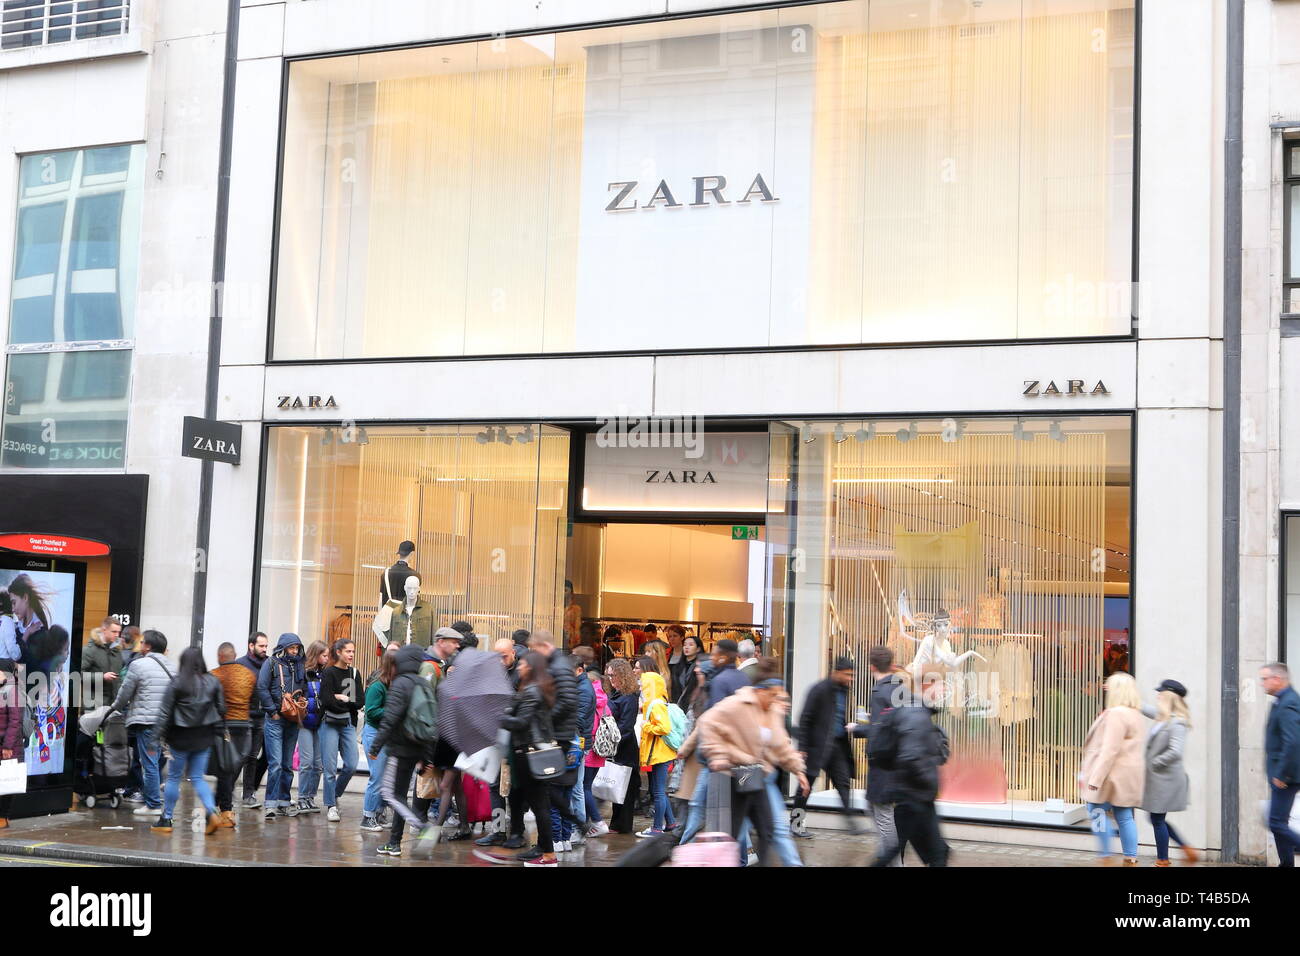 Zara fashion store in Oxford Street, London, UK Stock Photo - Alamy